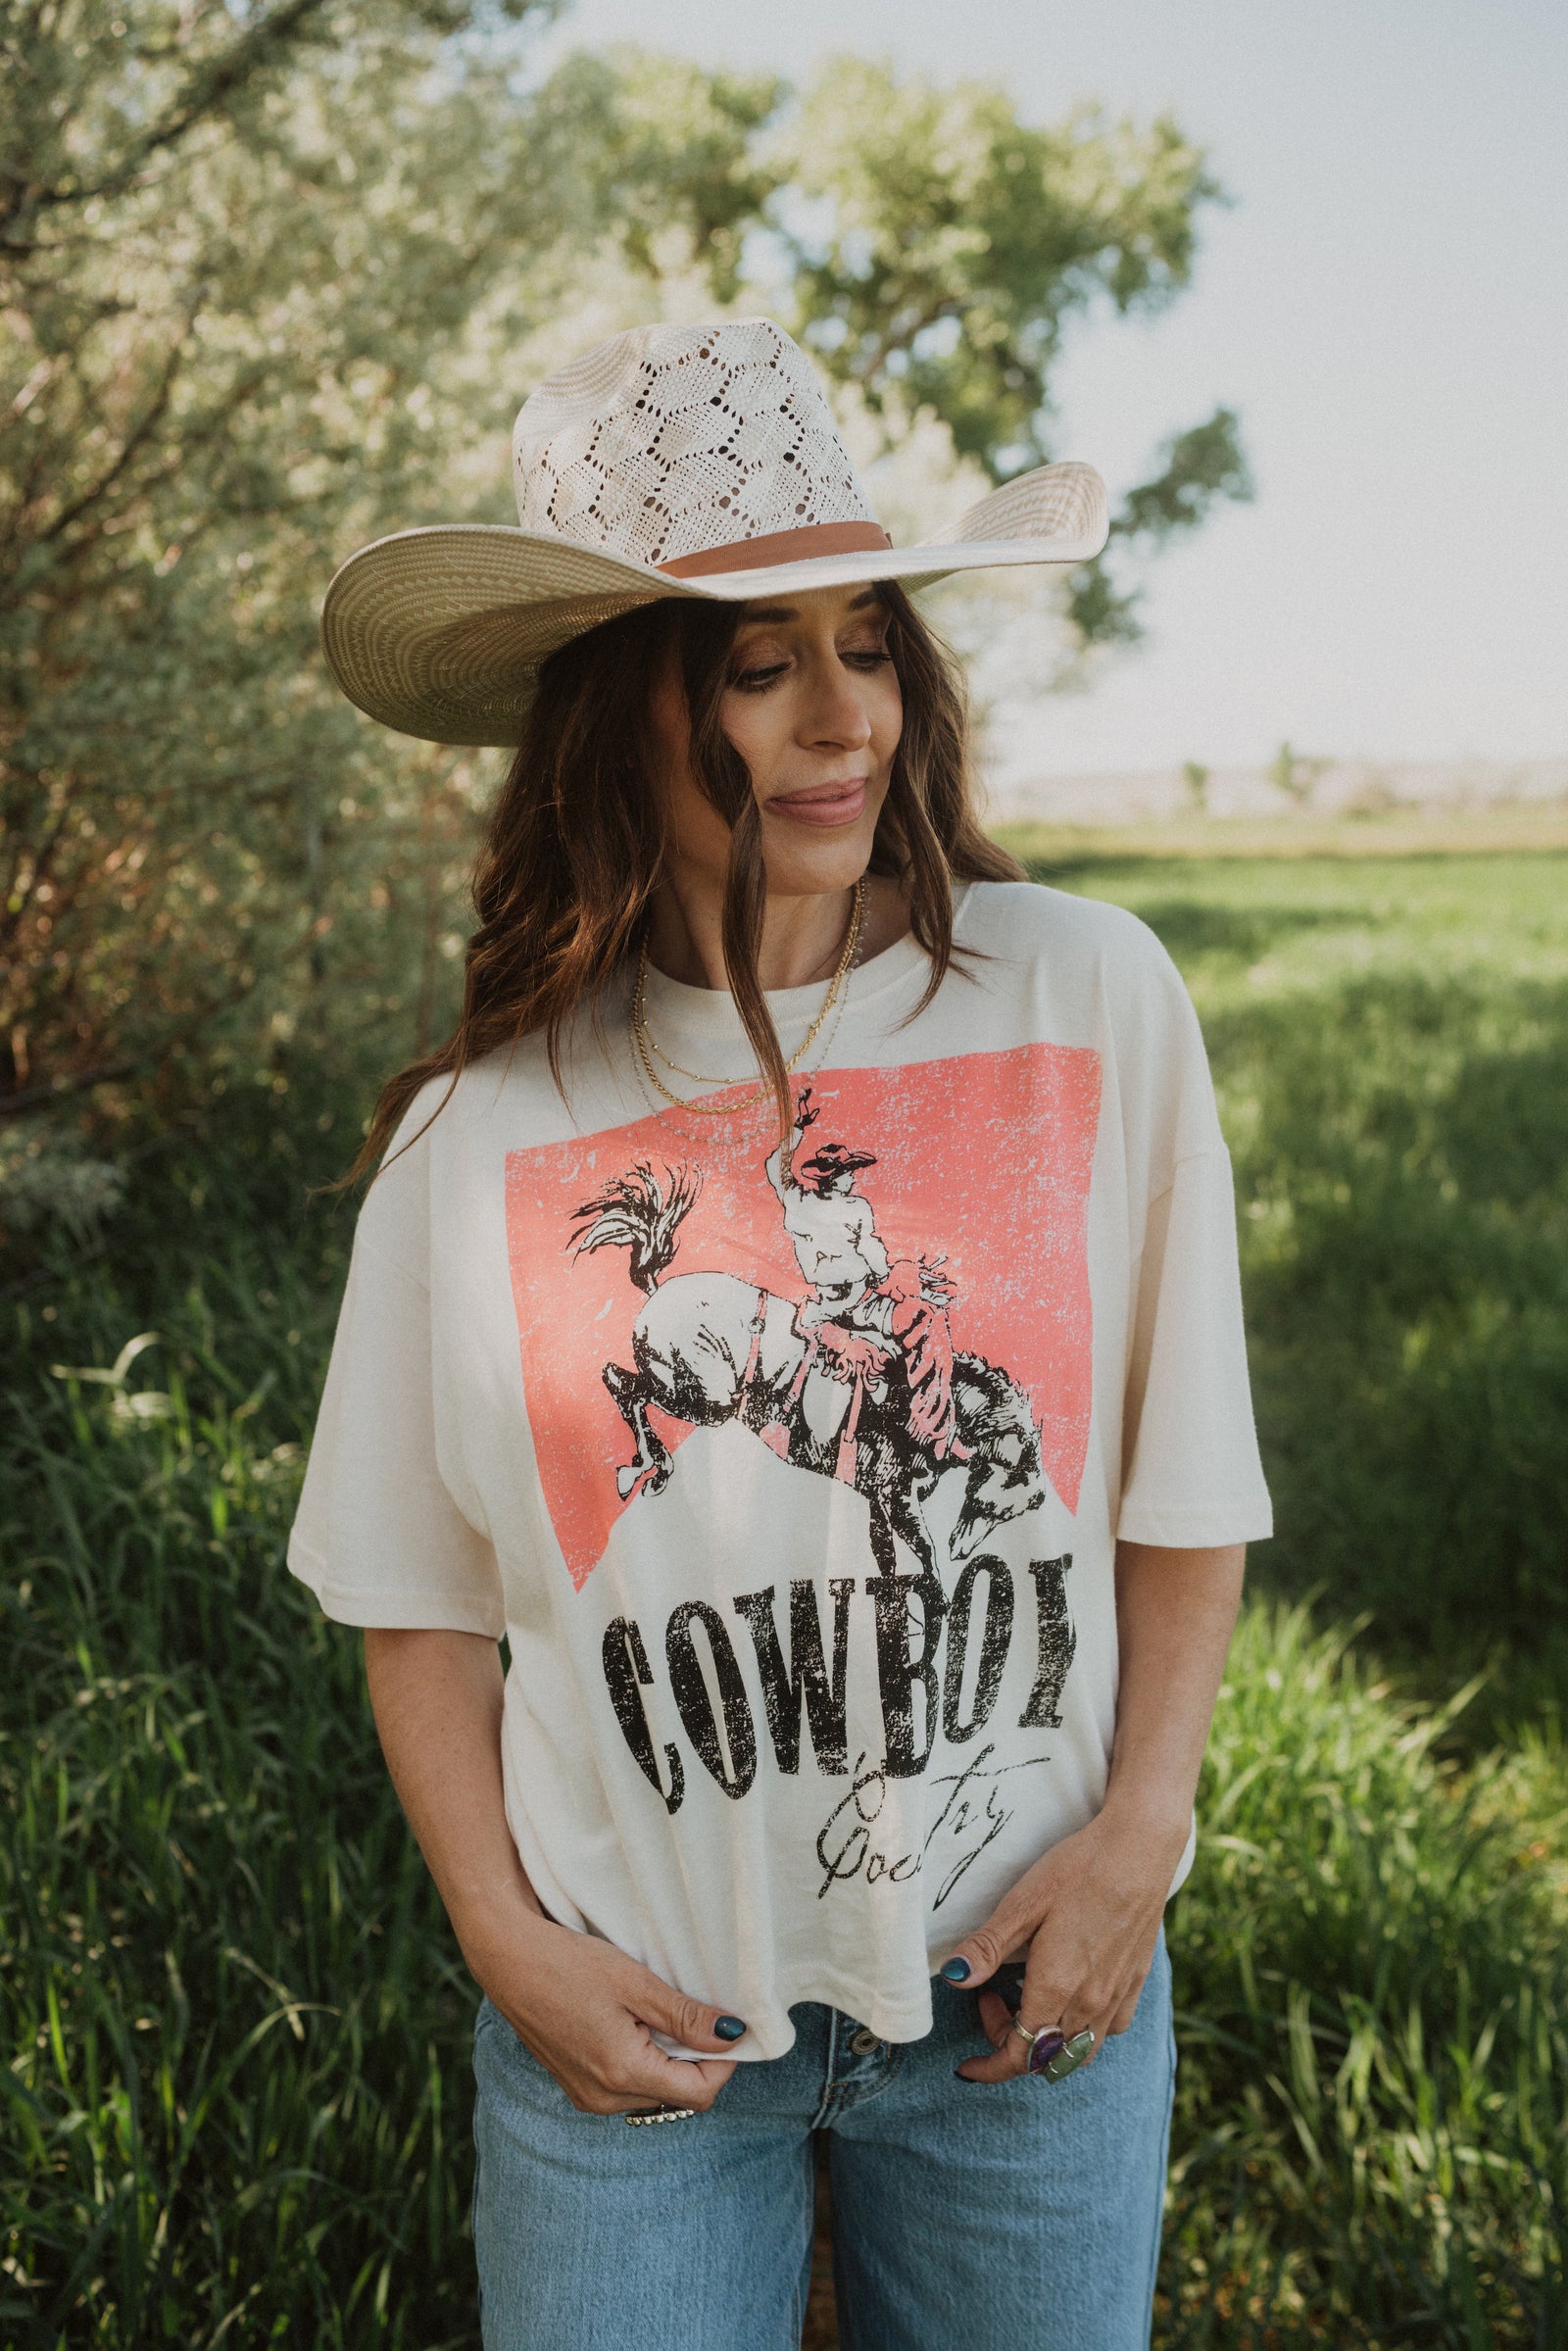 Cowboy Country T-Shirt